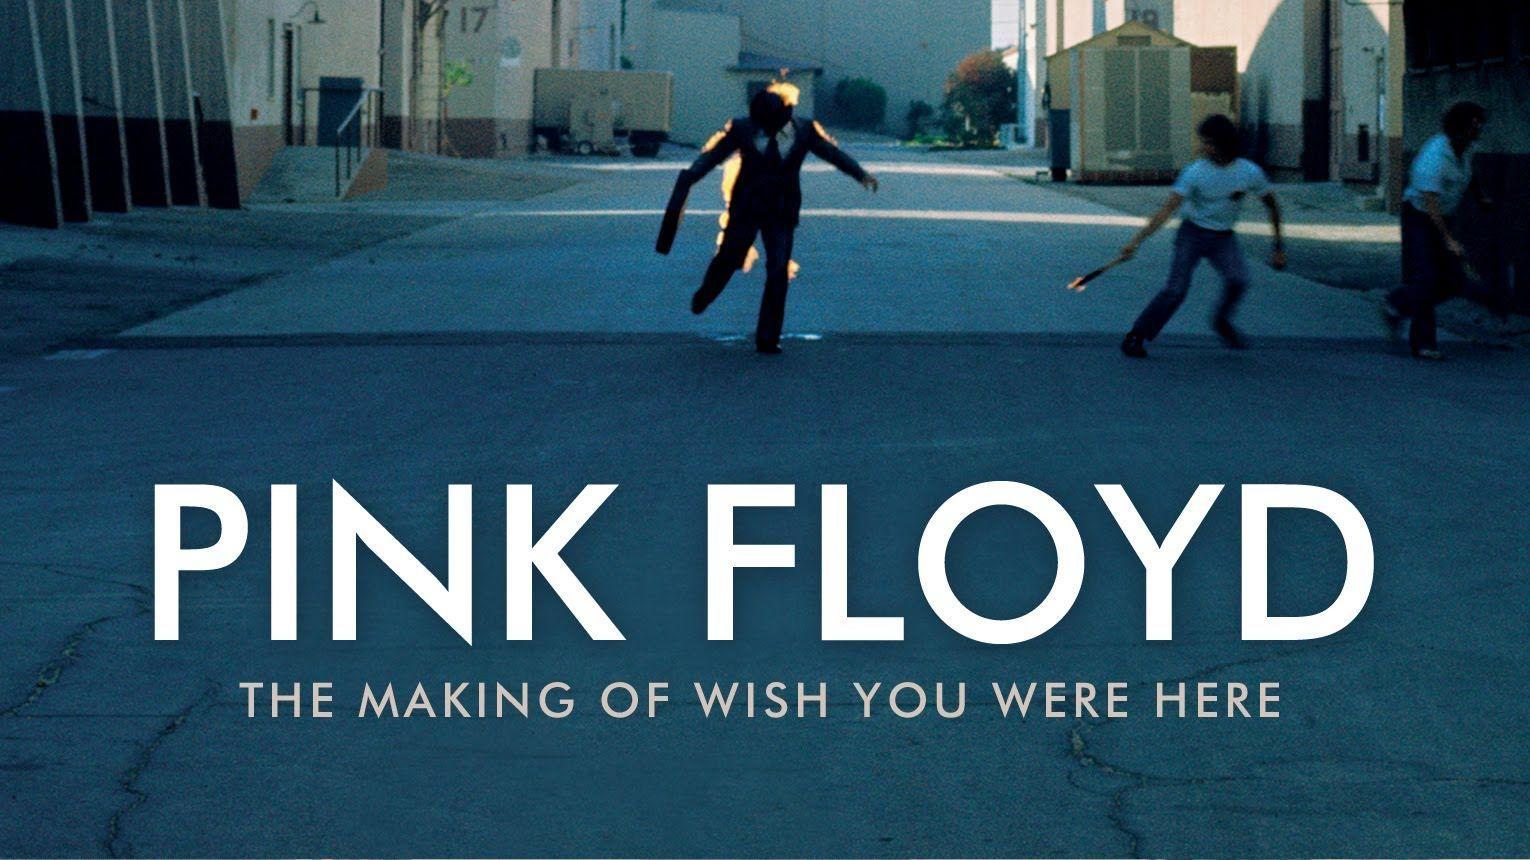 Pink Floyd Wish You Were Here Lyrics